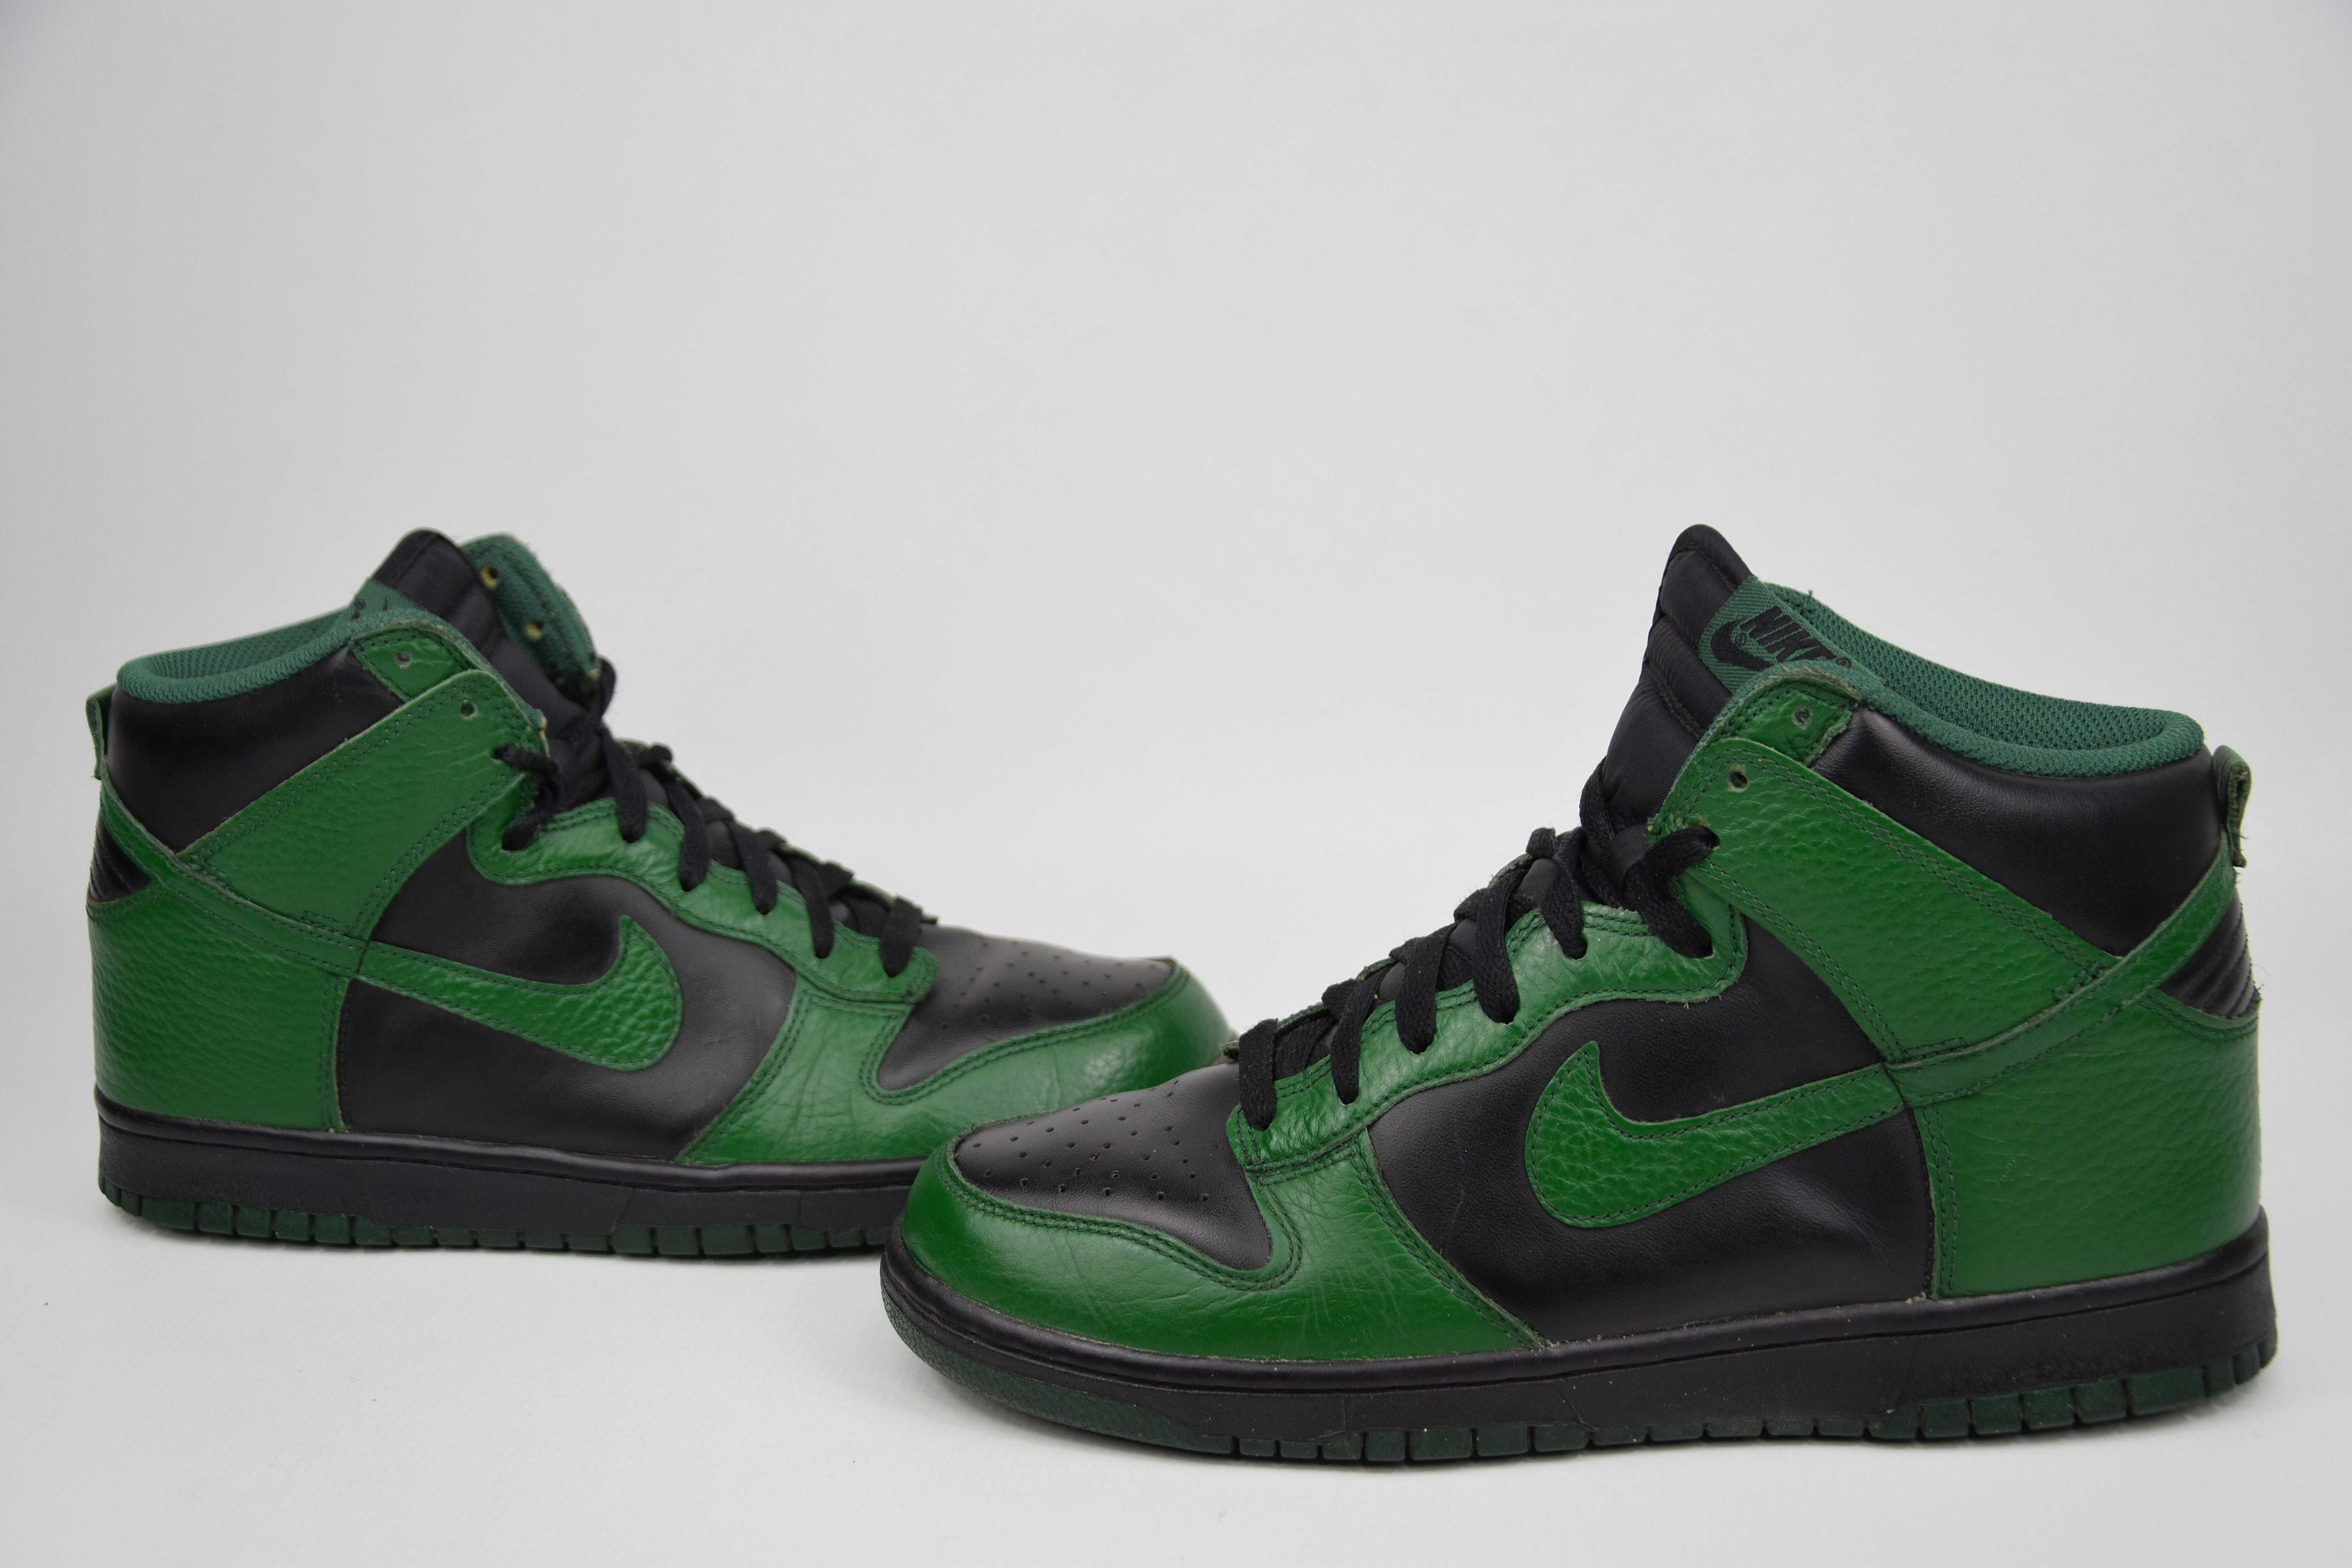 Buty męskie Nike Dunk Gorge Green Black rozmiar 42,5 skóra